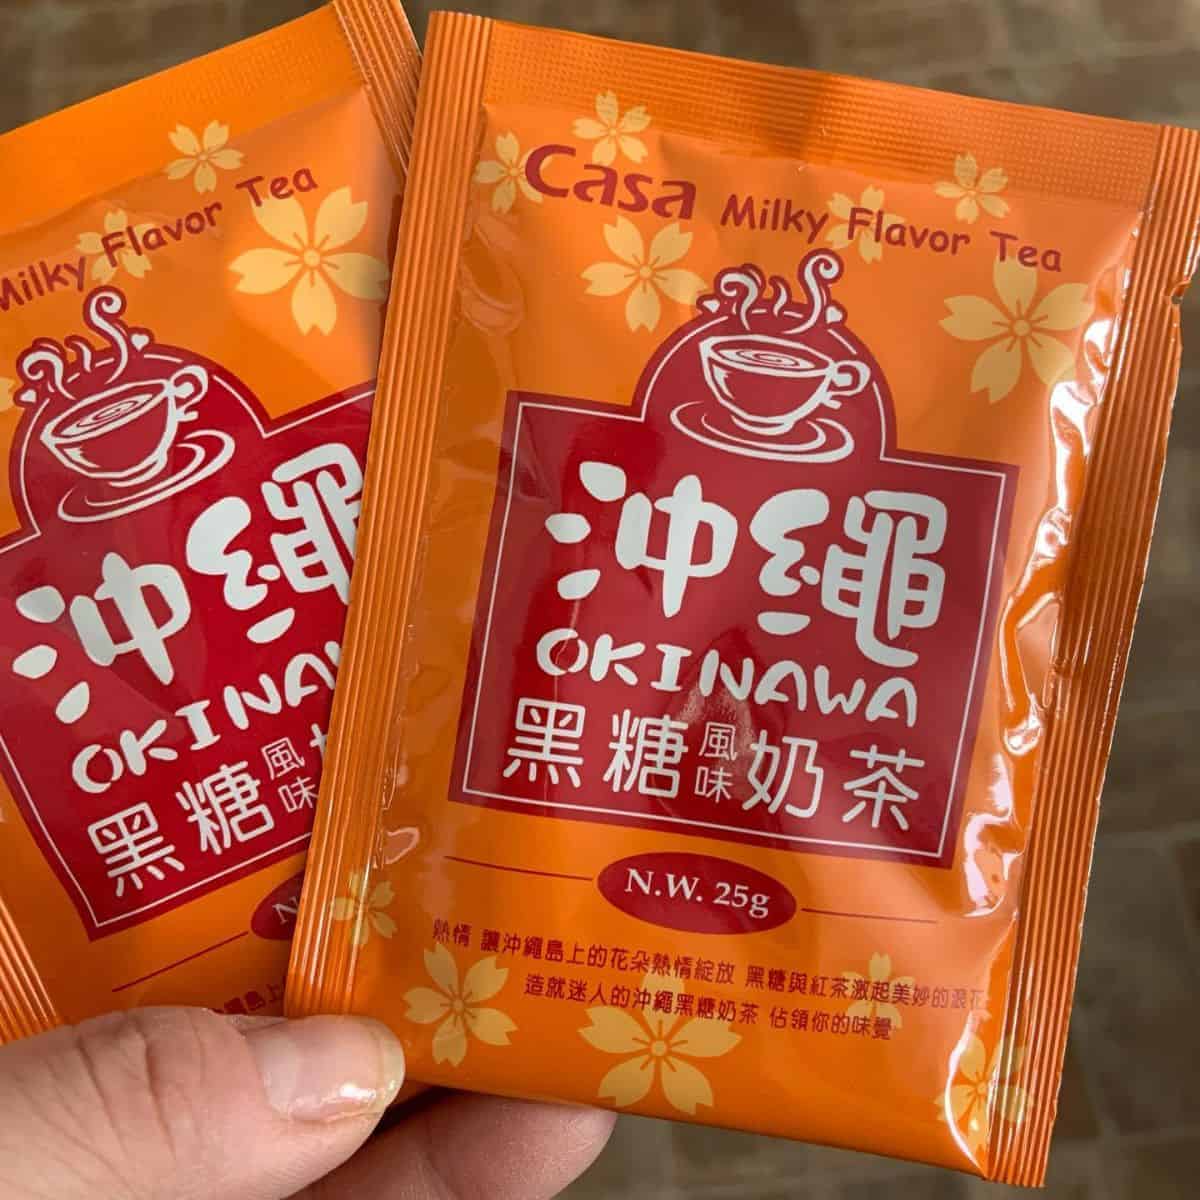 Okinawa flavoured drink from Casa in orange packaging